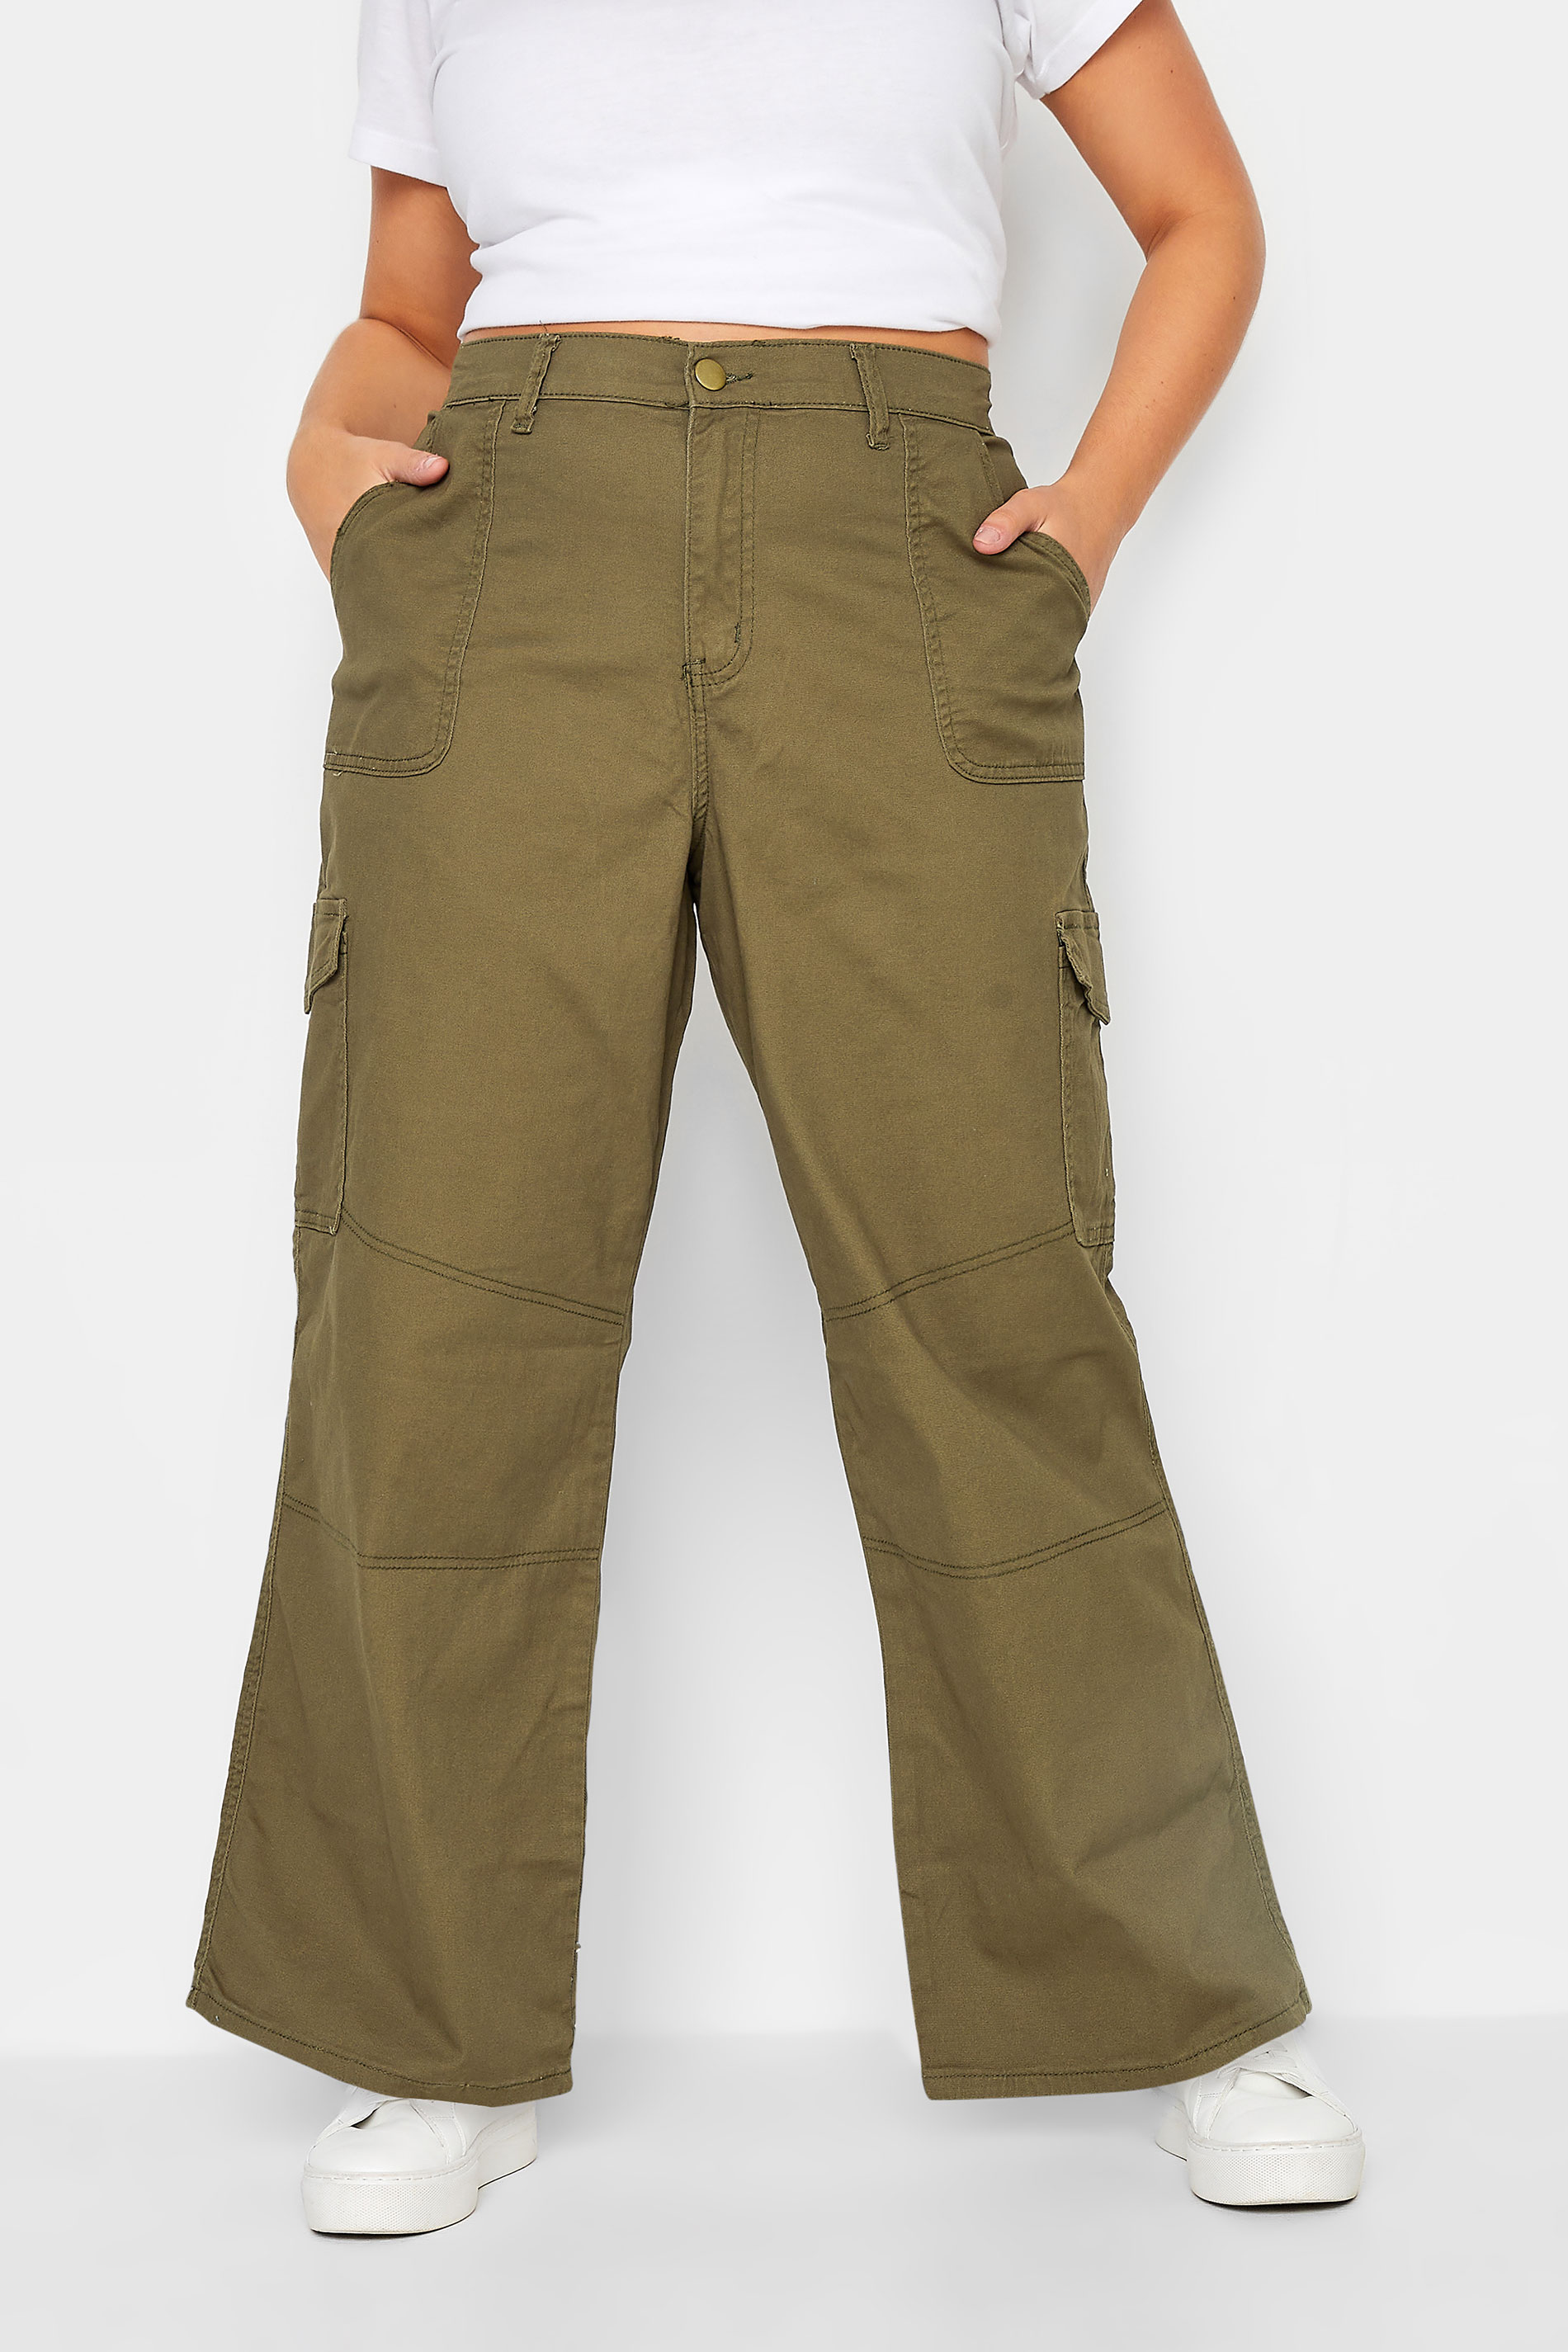 Green Skinny Cargo Pants High Rise Slim Stretch Combat Trousers | eBay